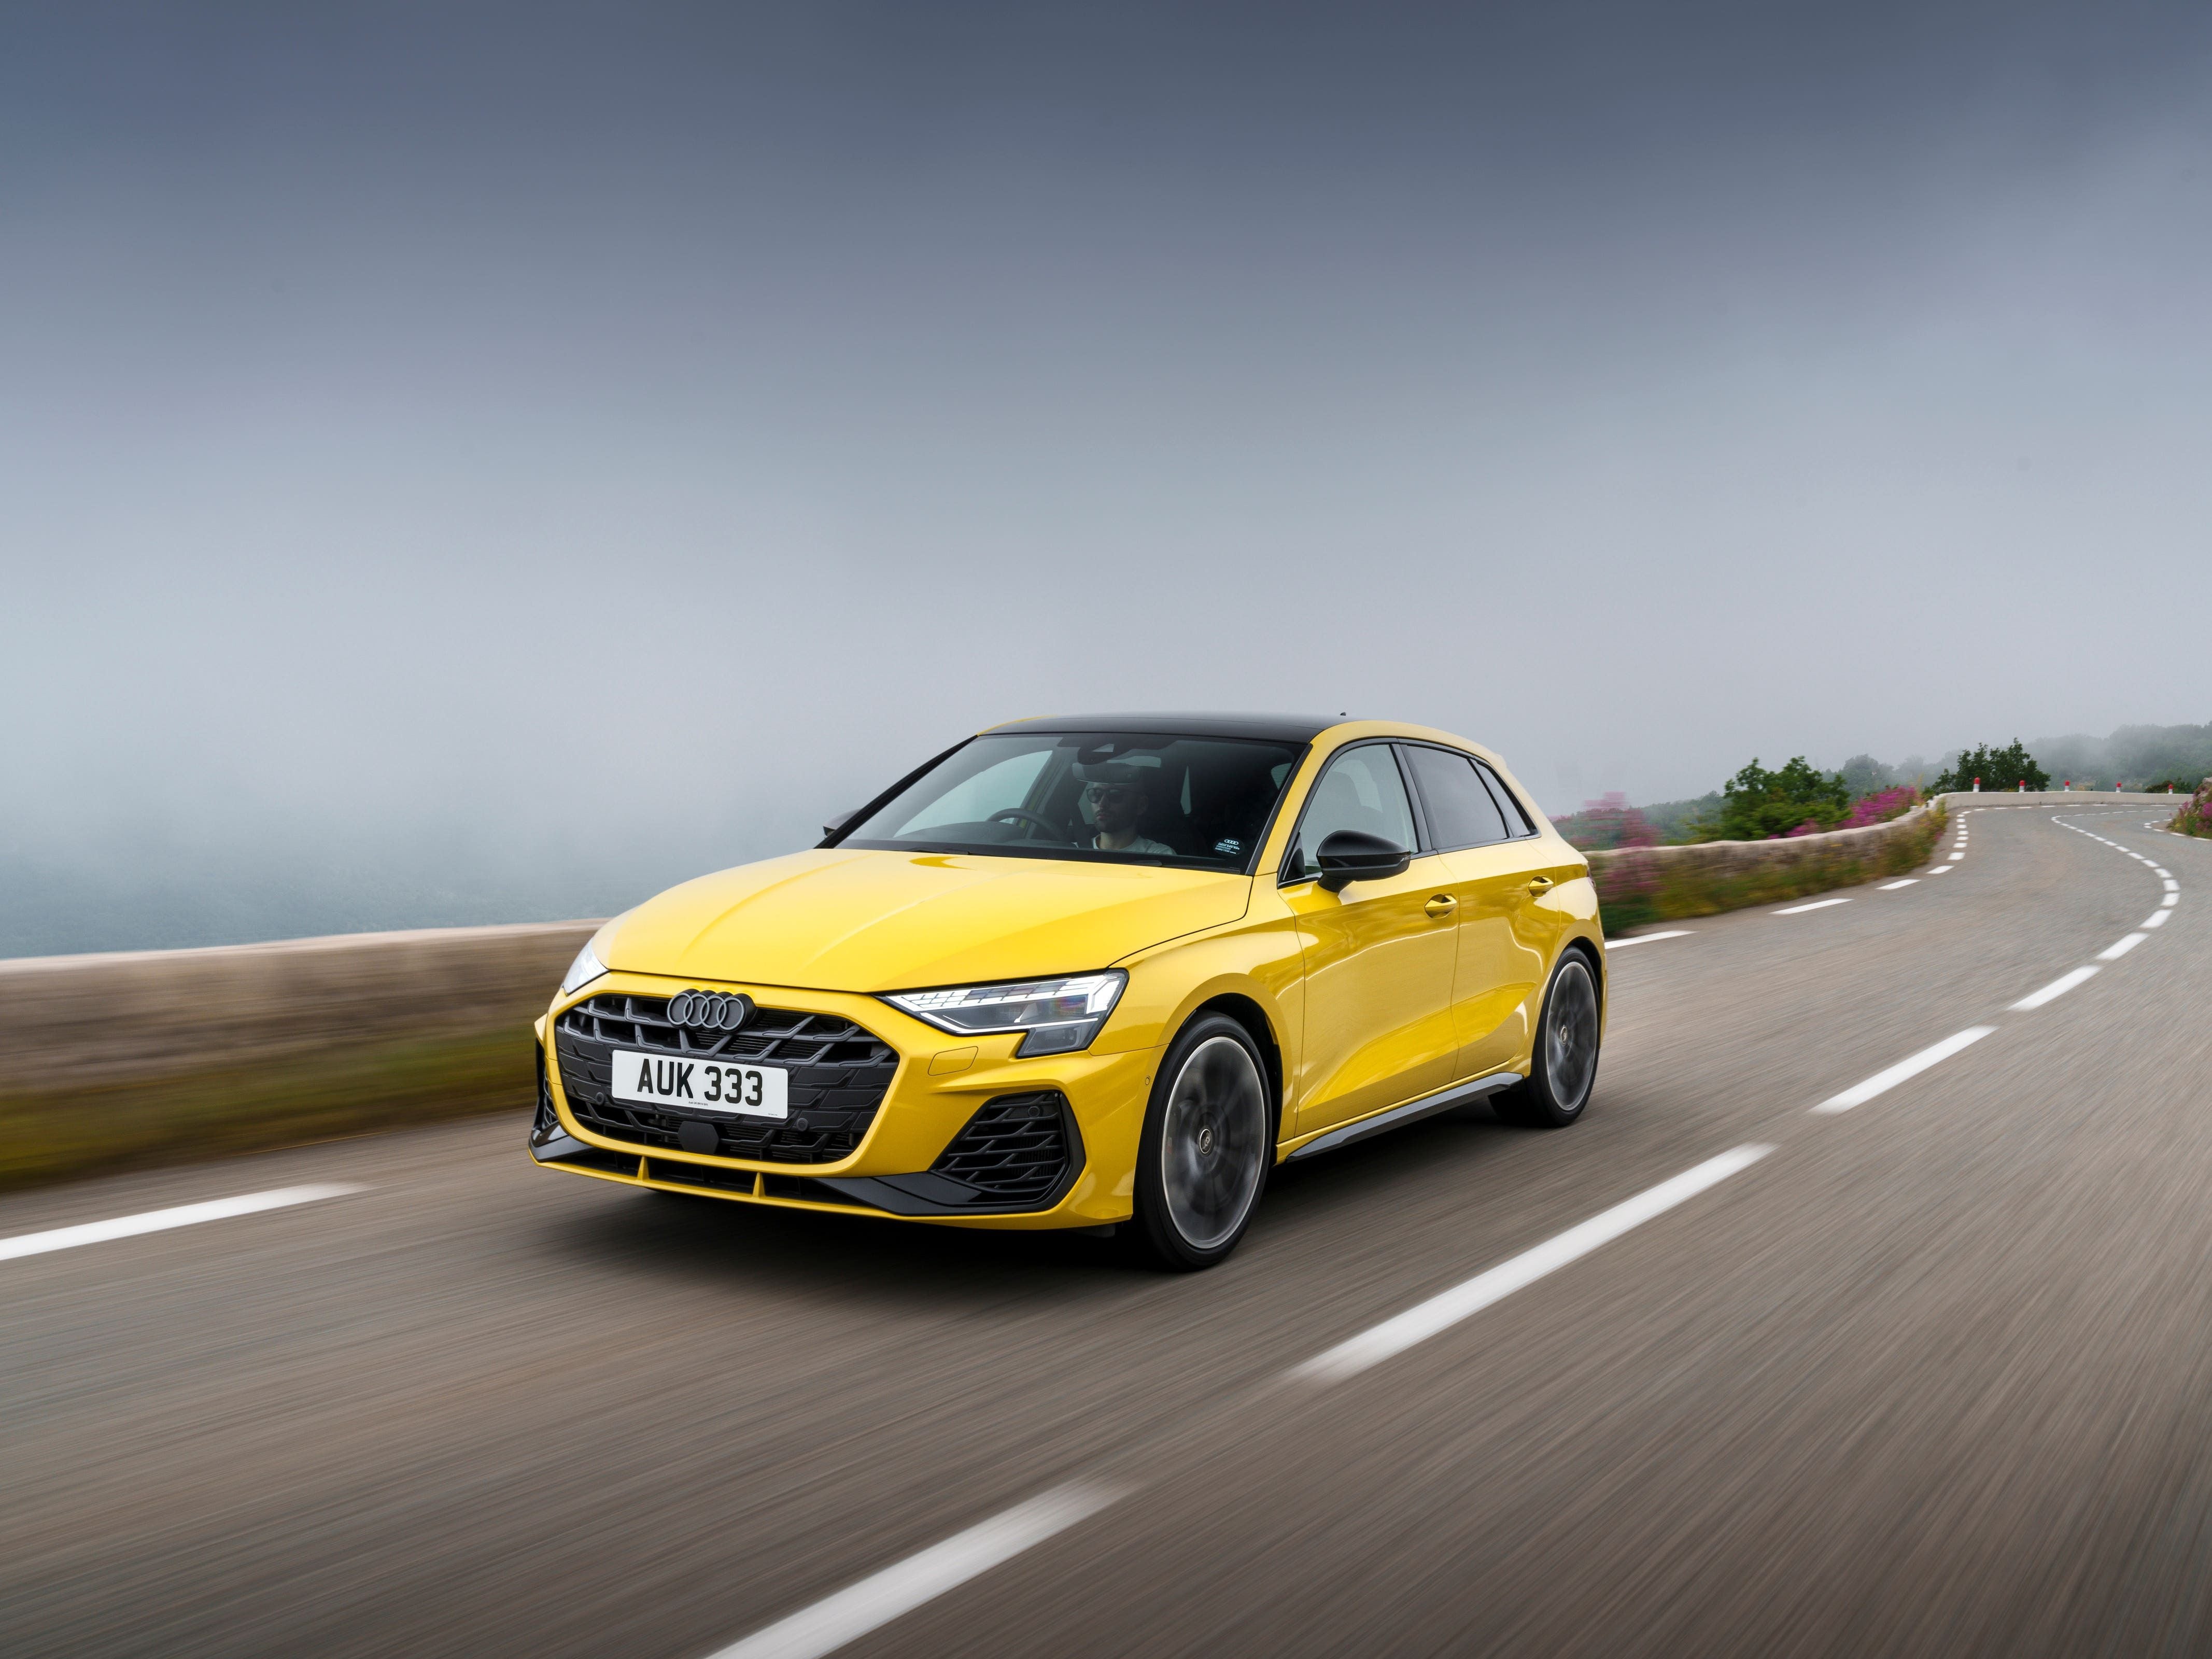 Audi warns of ‘challenging road ahead’ as half-year figures stabilise